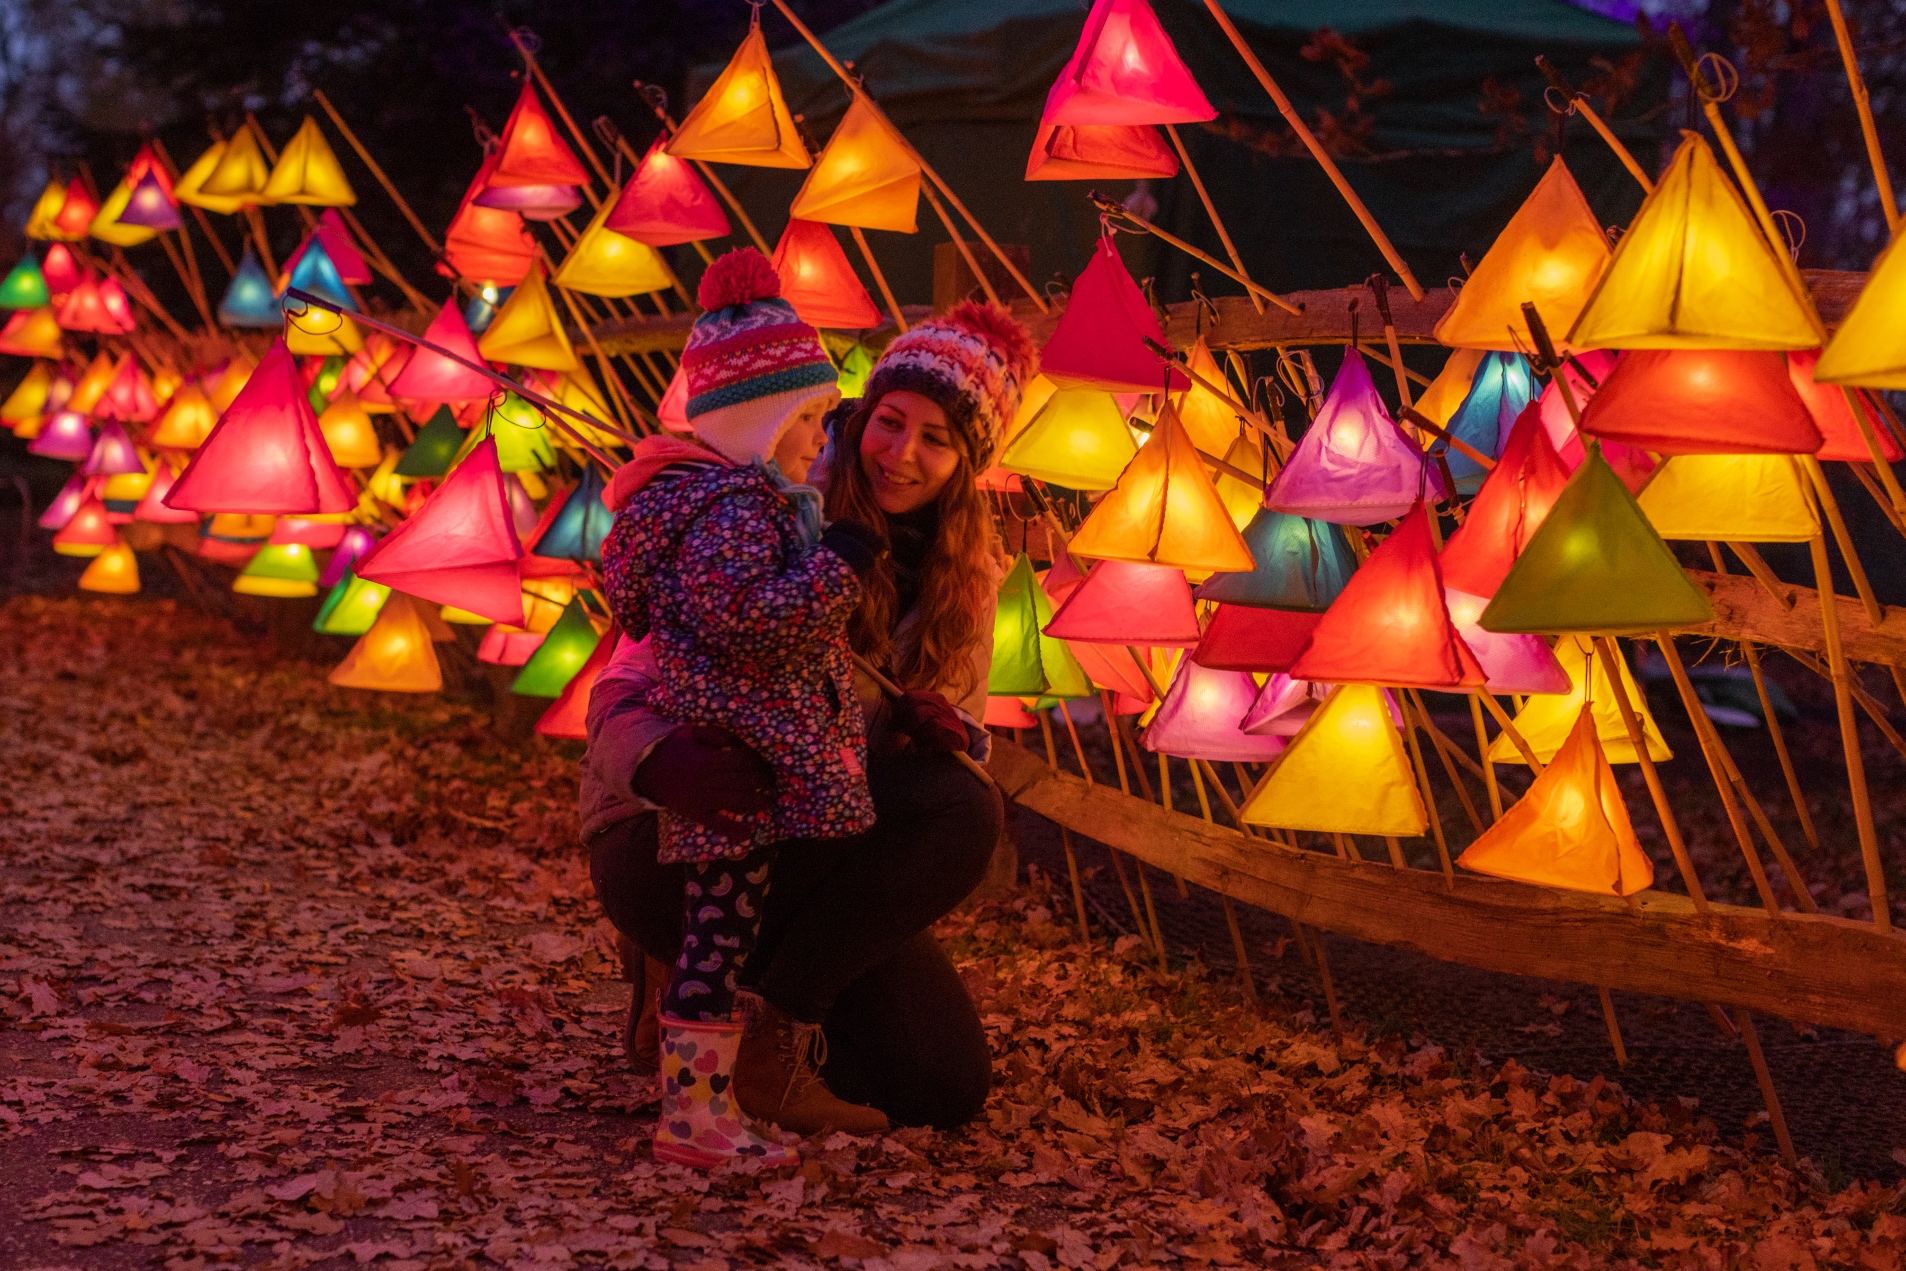 Mother and child enjoy glow of handheld lanterns